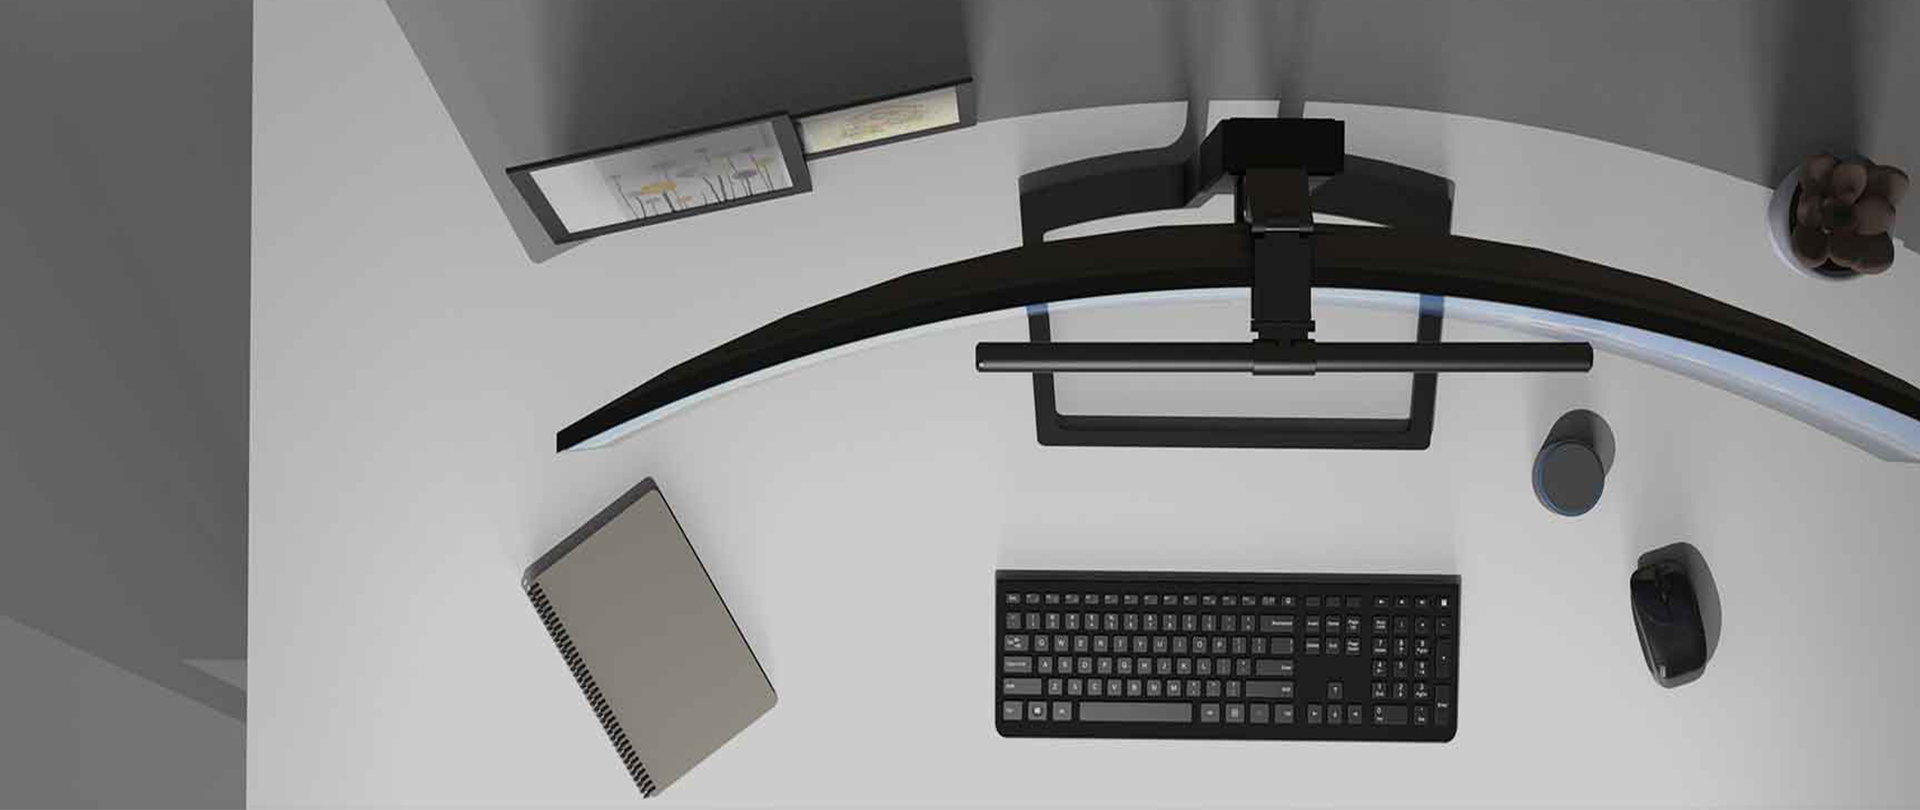 desk lamp monitor